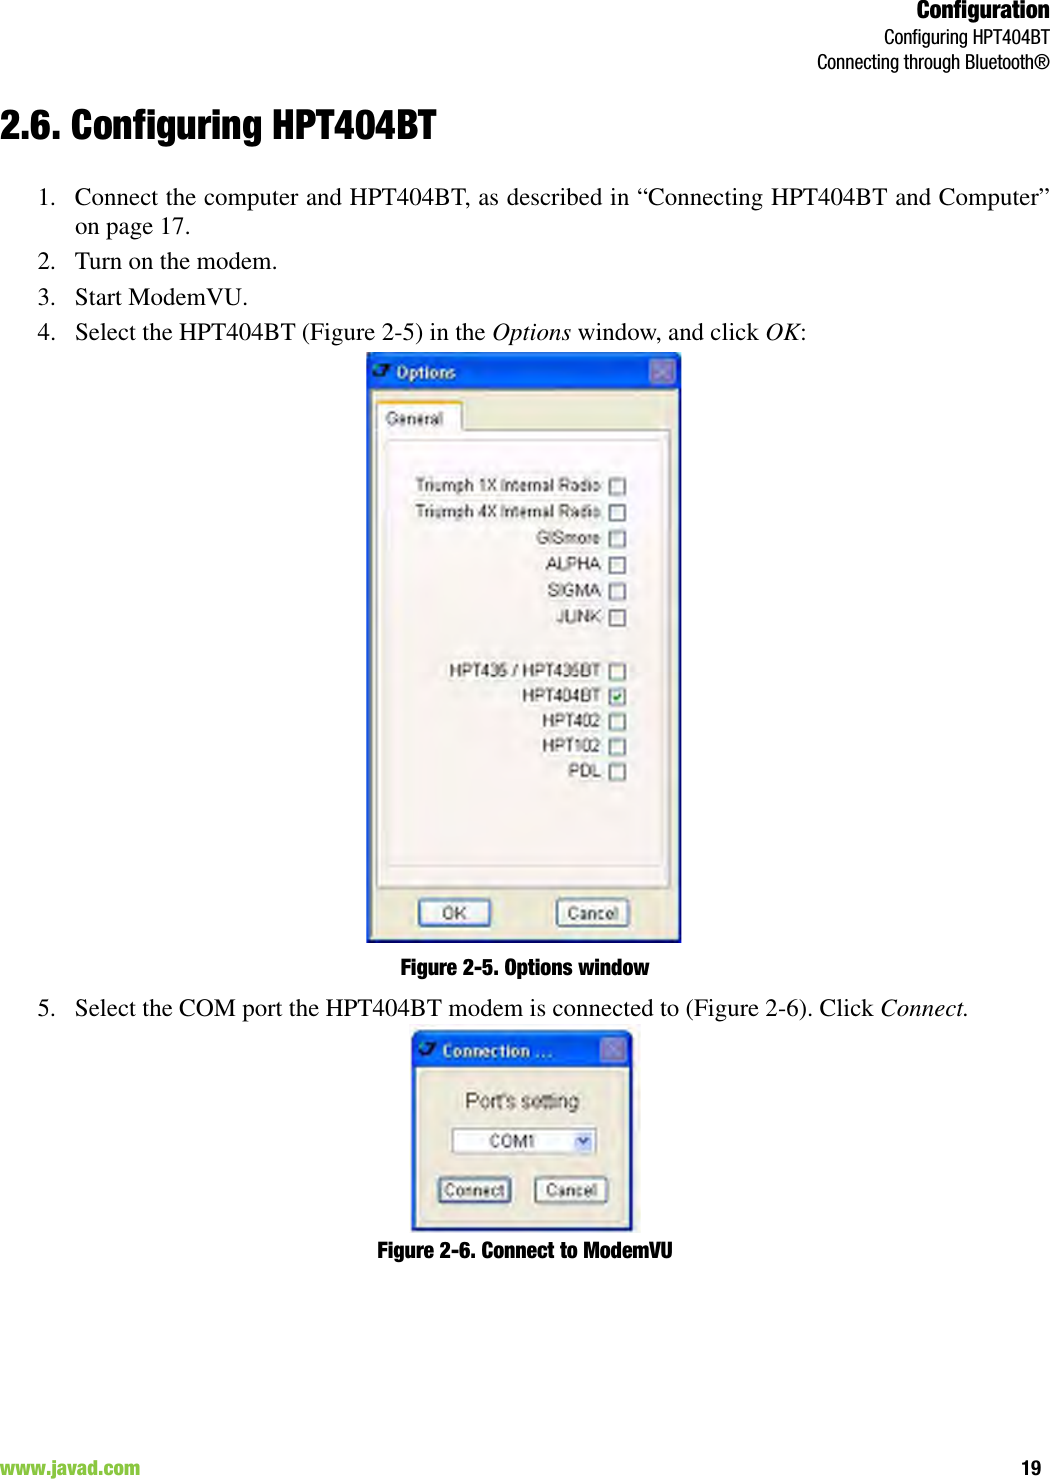 ConfigurationConfiguring HPT404BTConnecting through Bluetooth®19www.javad.com                                                                                                                                                        2.6. Configuring HPT404BT1. Connect the computer and HPT404BT, as described in “Connecting HPT404BT and Computer”on page 17. 2. Turn on the modem.3. Start ModemVU. 4. Select the HPT404BT (Figure 2-5) in the Options window, and click OK:Figure 2-5. Options window5. Select the COM port the HPT404BT modem is connected to (Figure 2-6). Click Connect.Figure 2-6. Connect to ModemVU